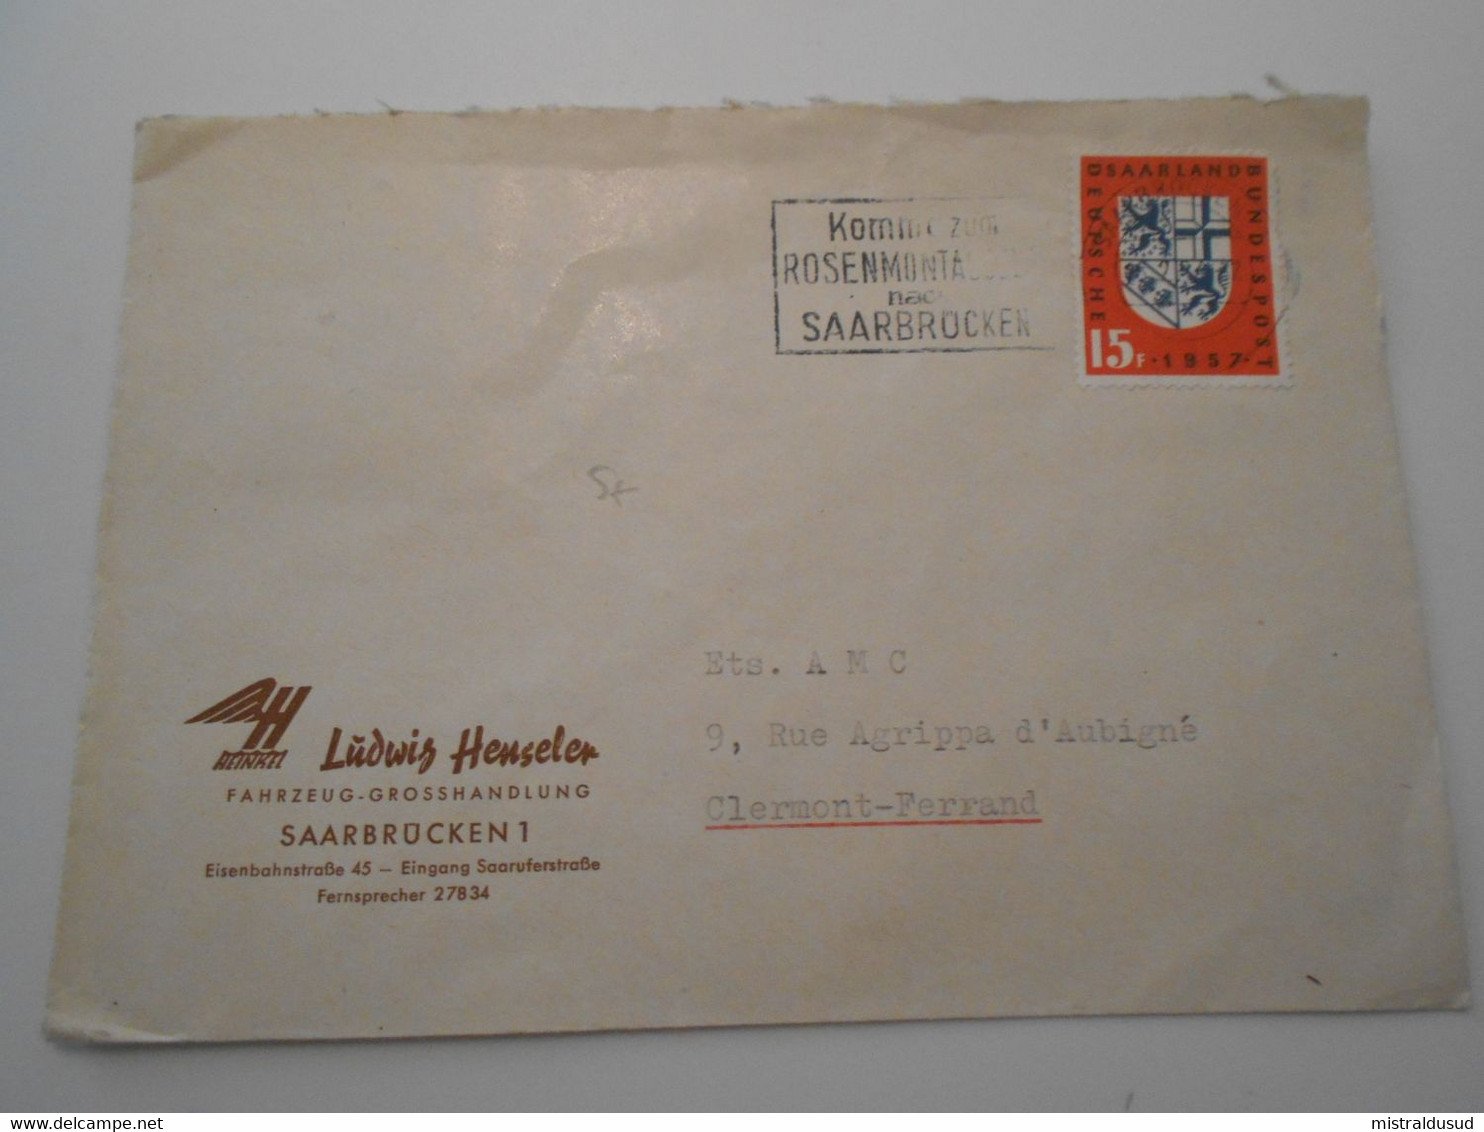 Sarre , Lettre De Saarbrucken 1957 Pour Clermont-ferrand - Briefe U. Dokumente